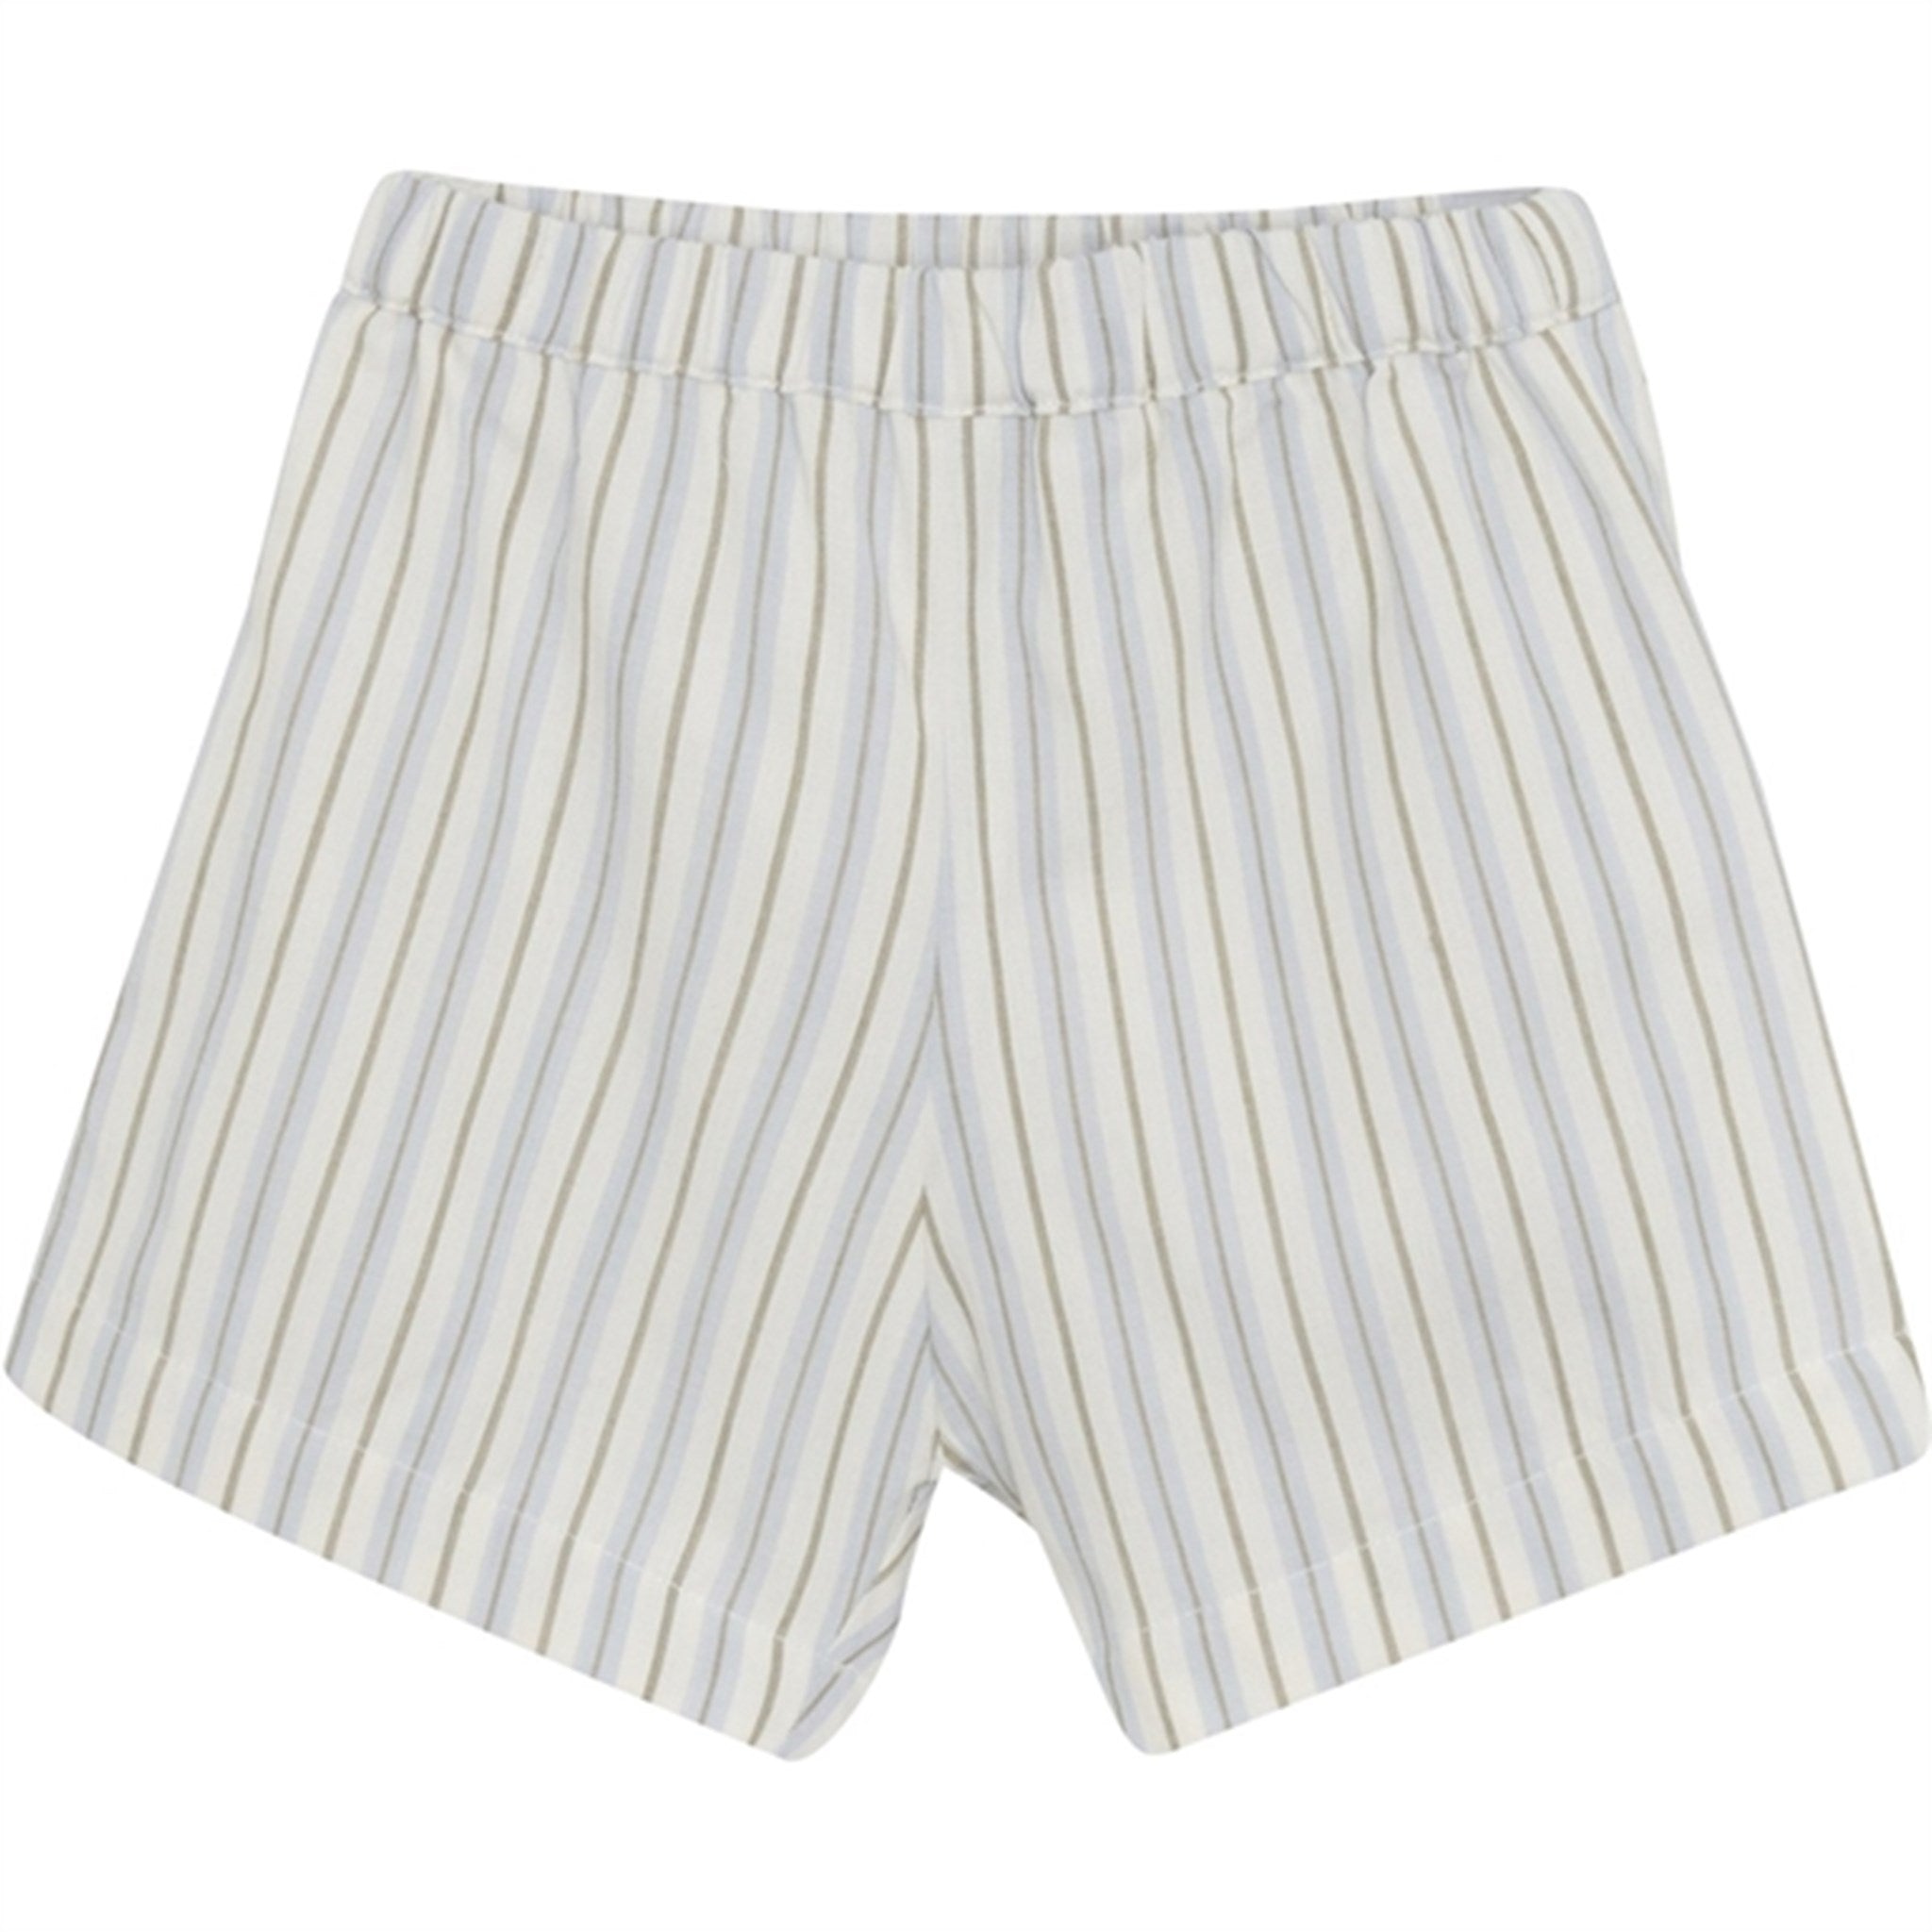 Huttelihut Woven Stripe Silver Sage Shorts